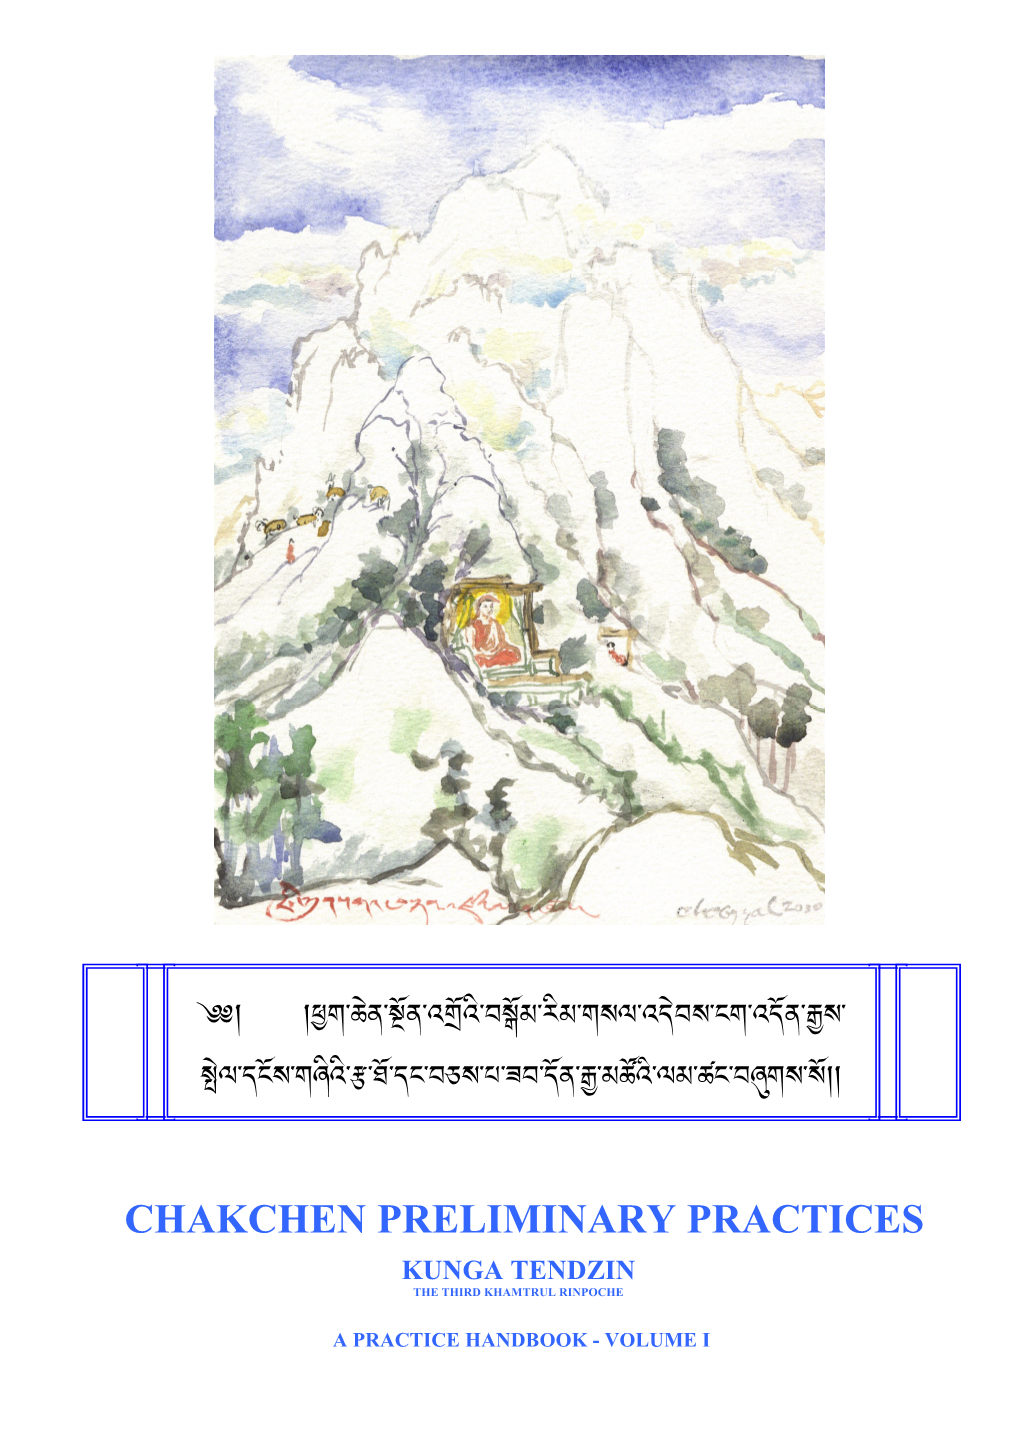 The Drukpa Kagyü Lineage of Tibetan Buddhism